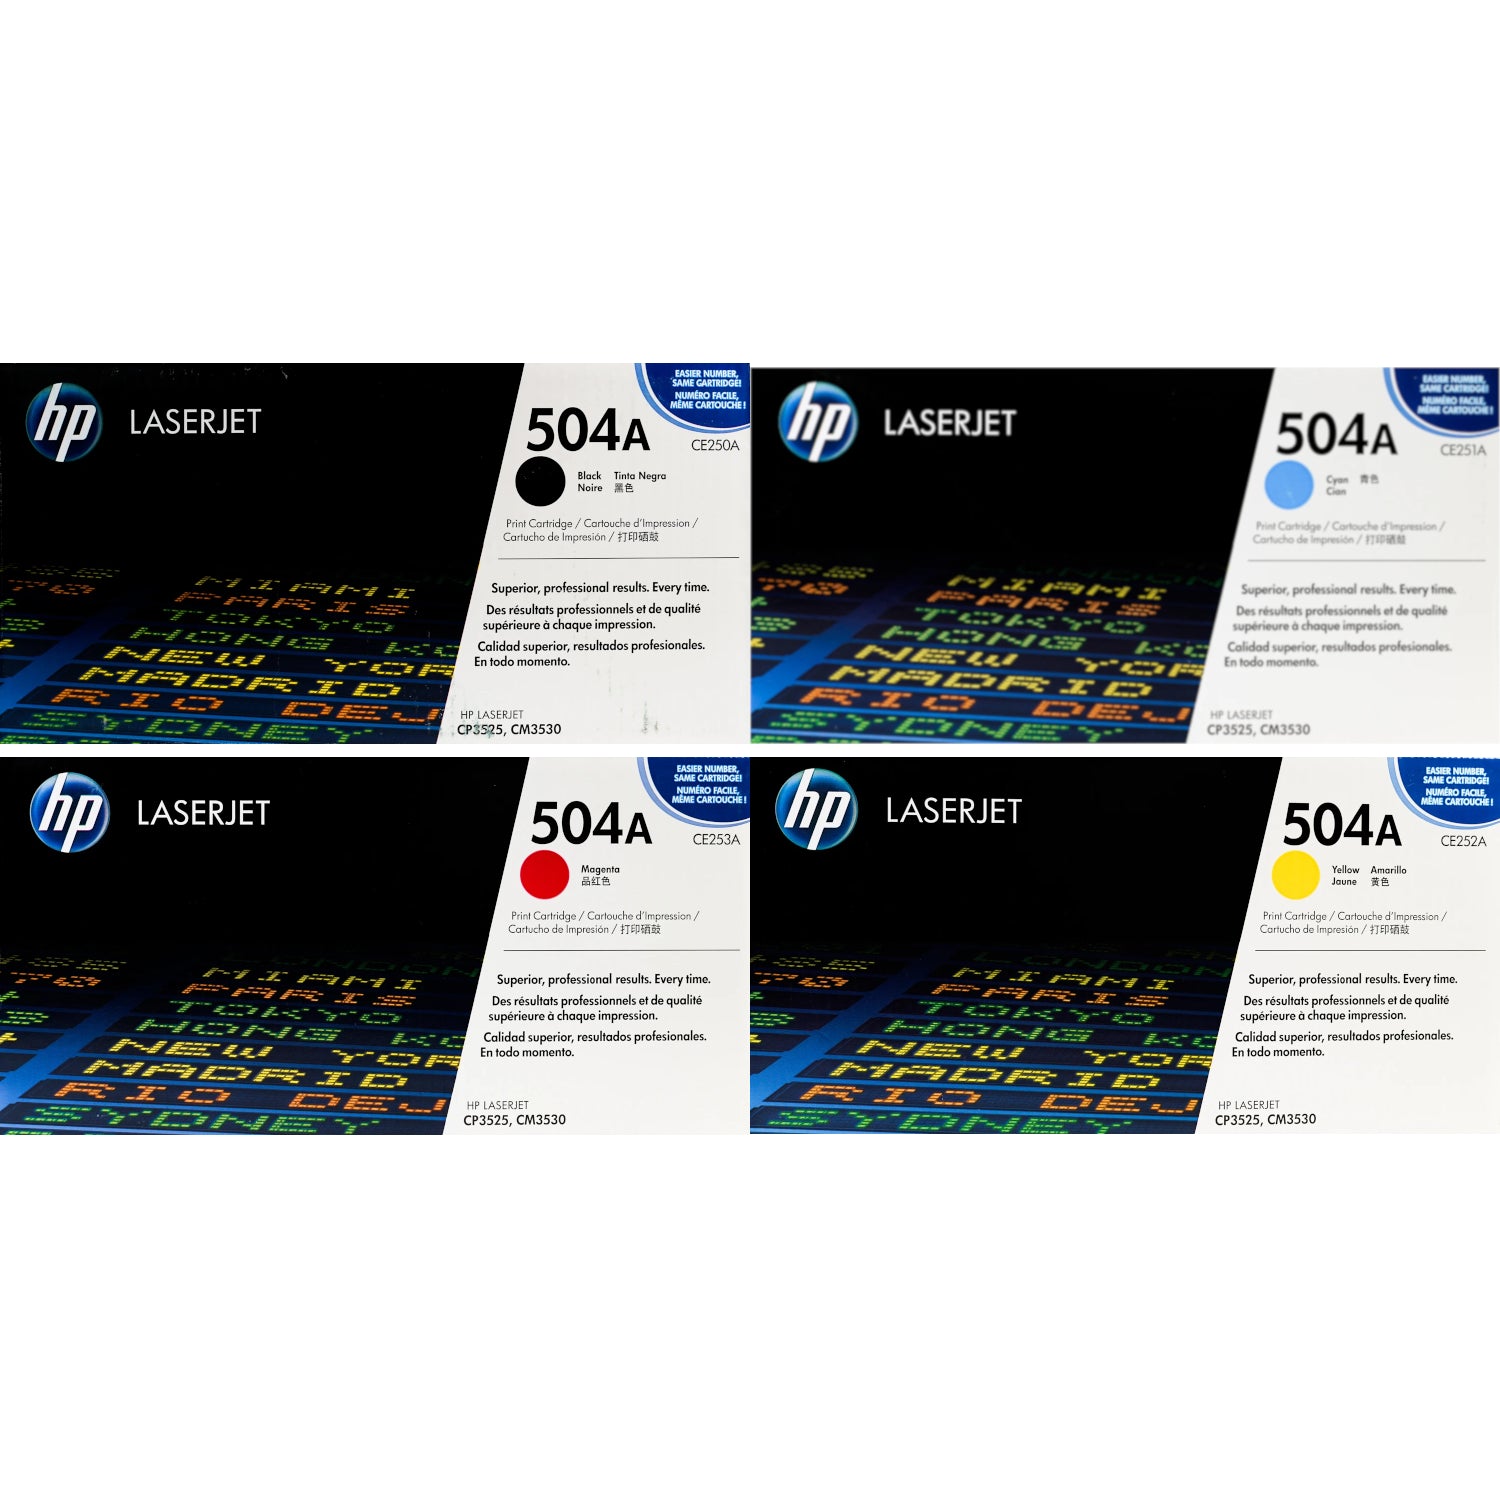 HP 504A Toner - Combo 4 pack - CE250A CE251A CE252A CE253A - Black Cyan Magenta Yellow - Original HP LaserJet Toner Cartridges